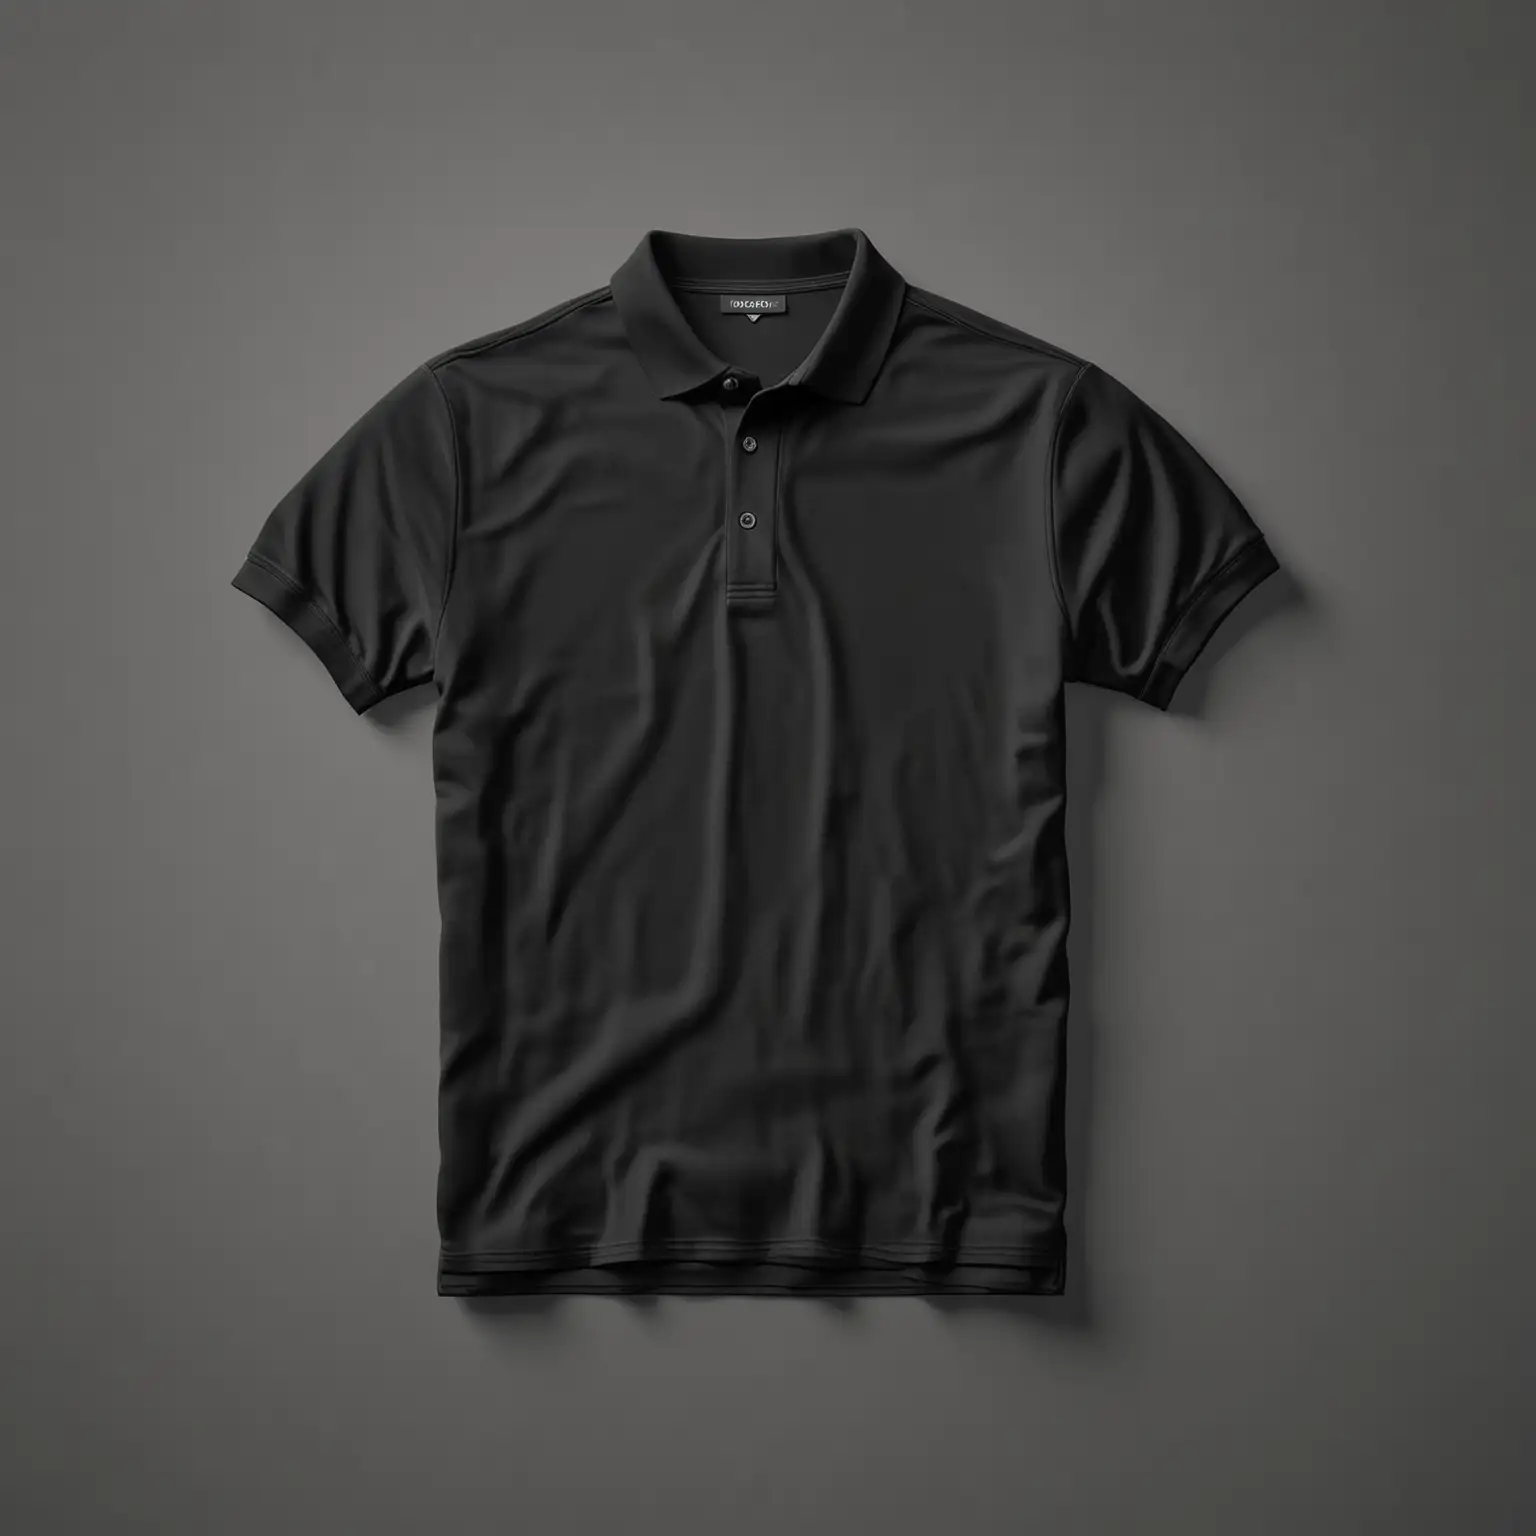 plain black polo shirt 3d mockup on white background